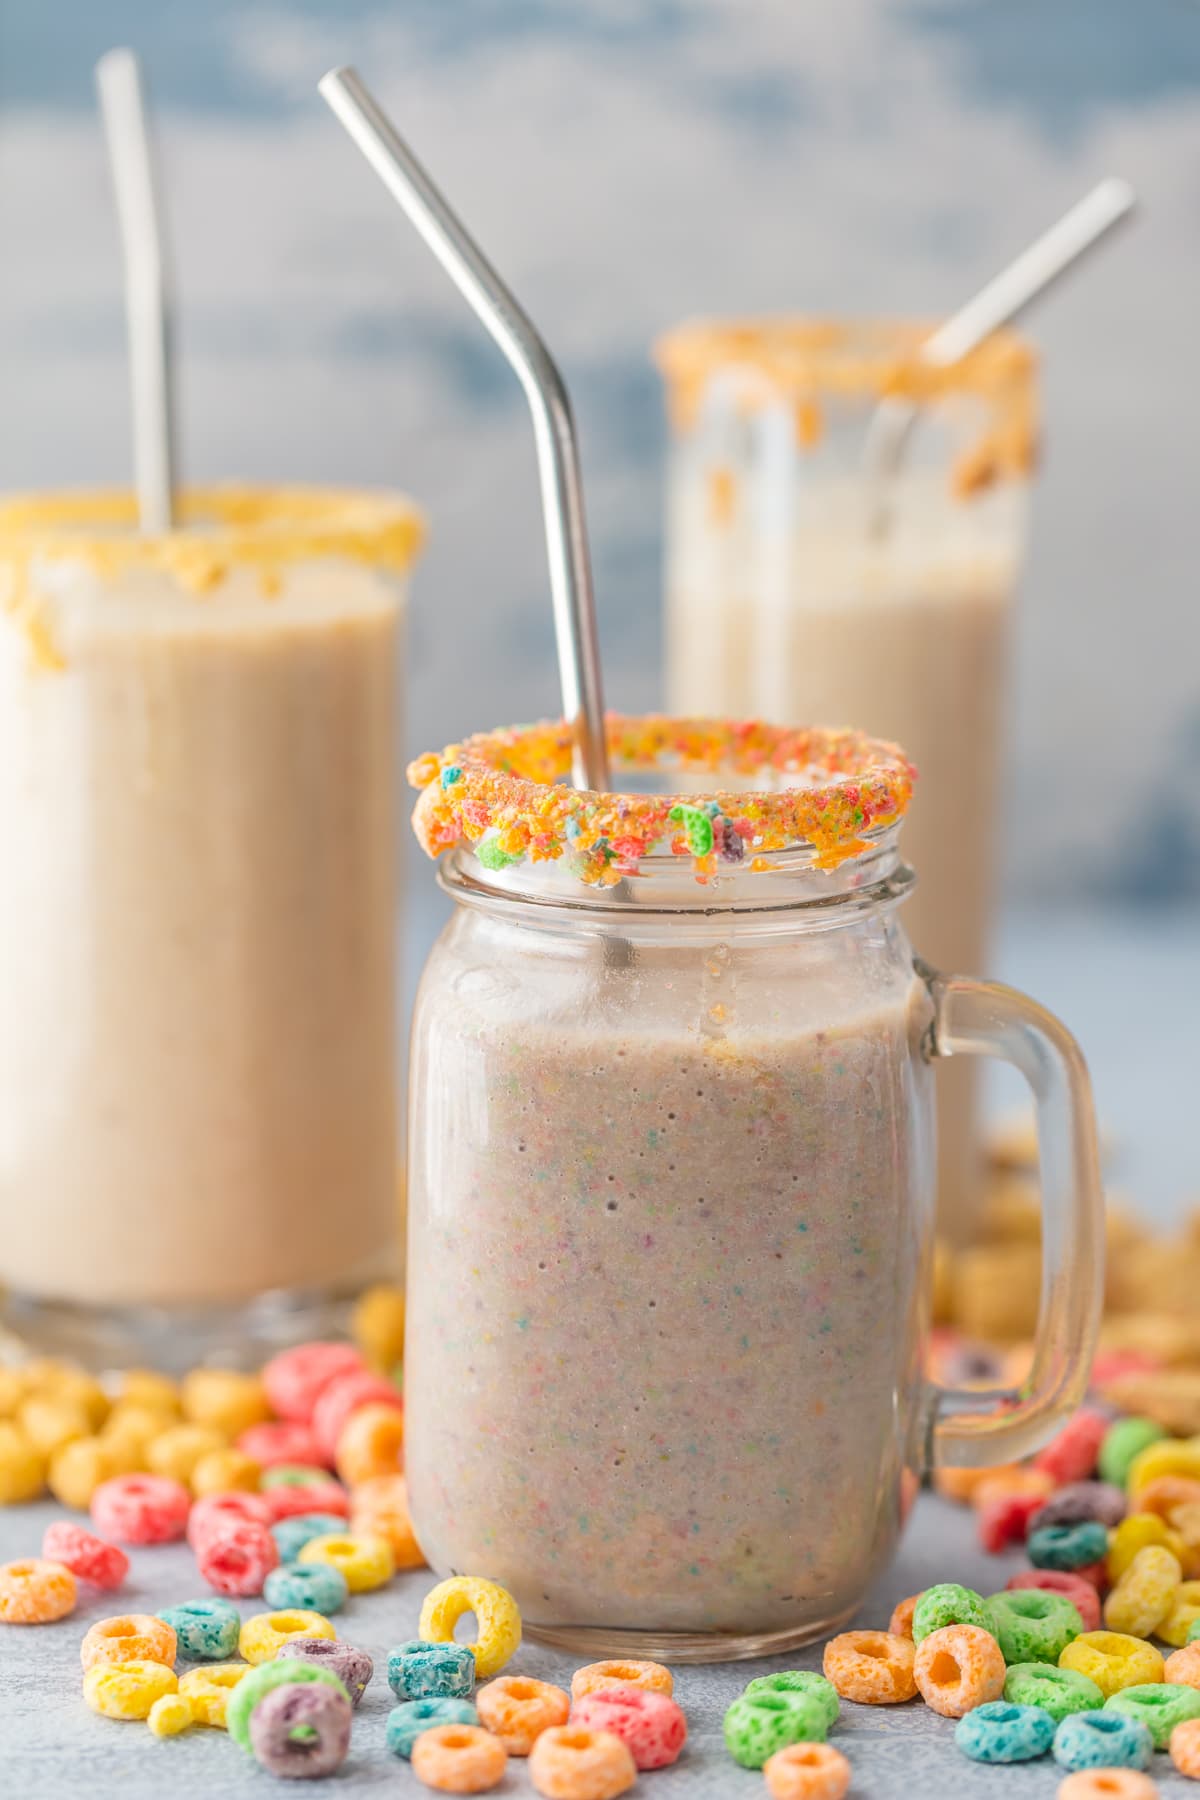 https://www.thecookierookie.com/wp-content/uploads/2017/02/breakfast-cereal-smoothies-3-ways-13-of-14.jpg